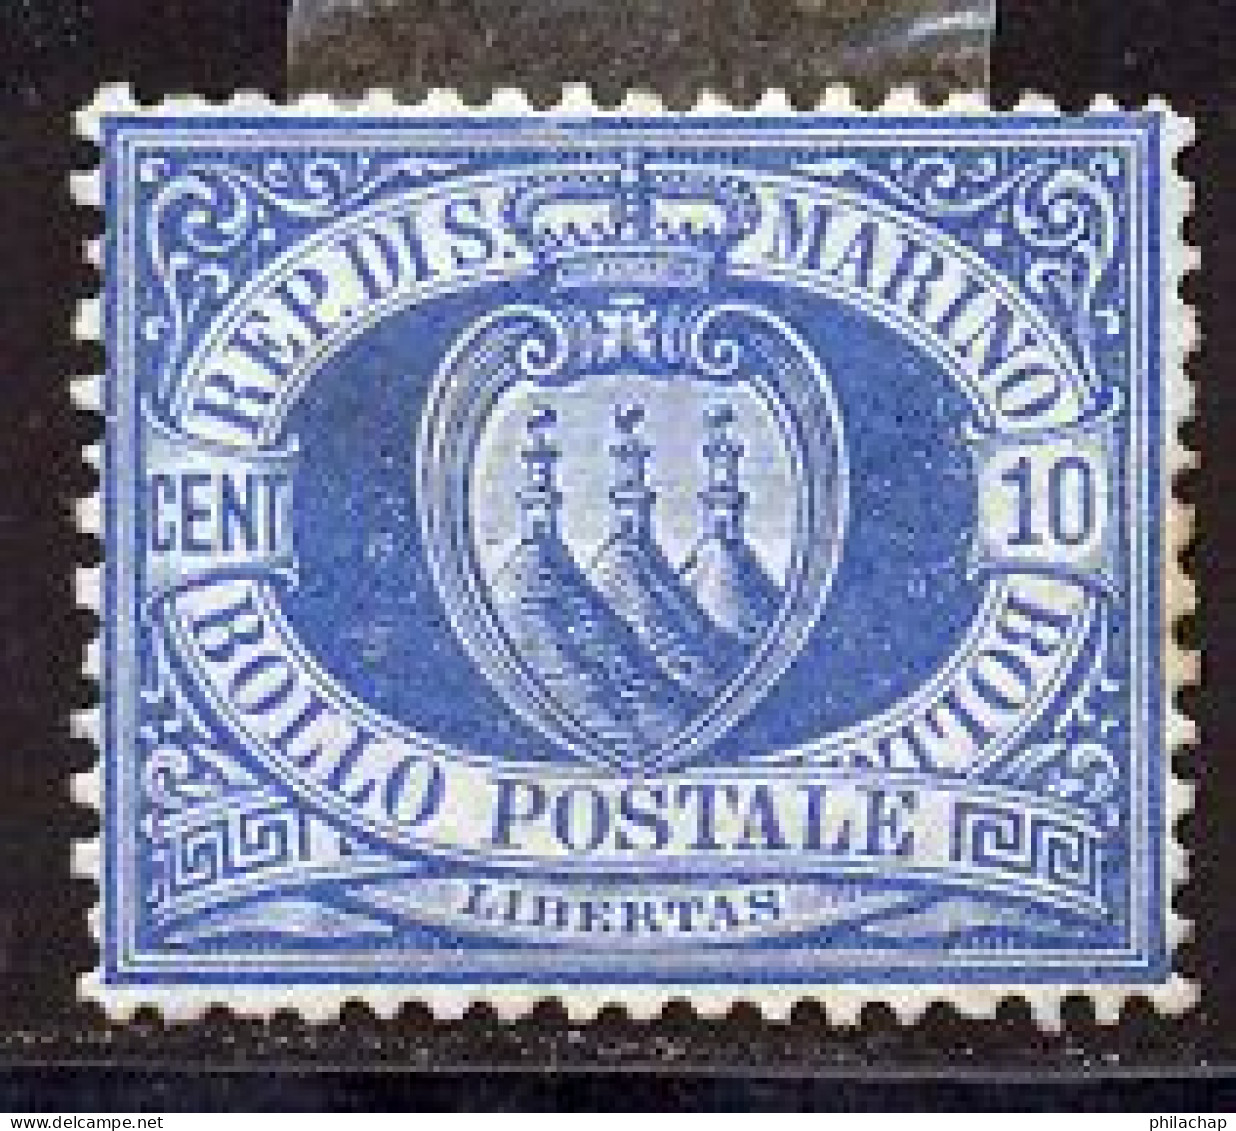 Saint-Marin 1877 Yvert 3 * B Charniere(s) - Unused Stamps